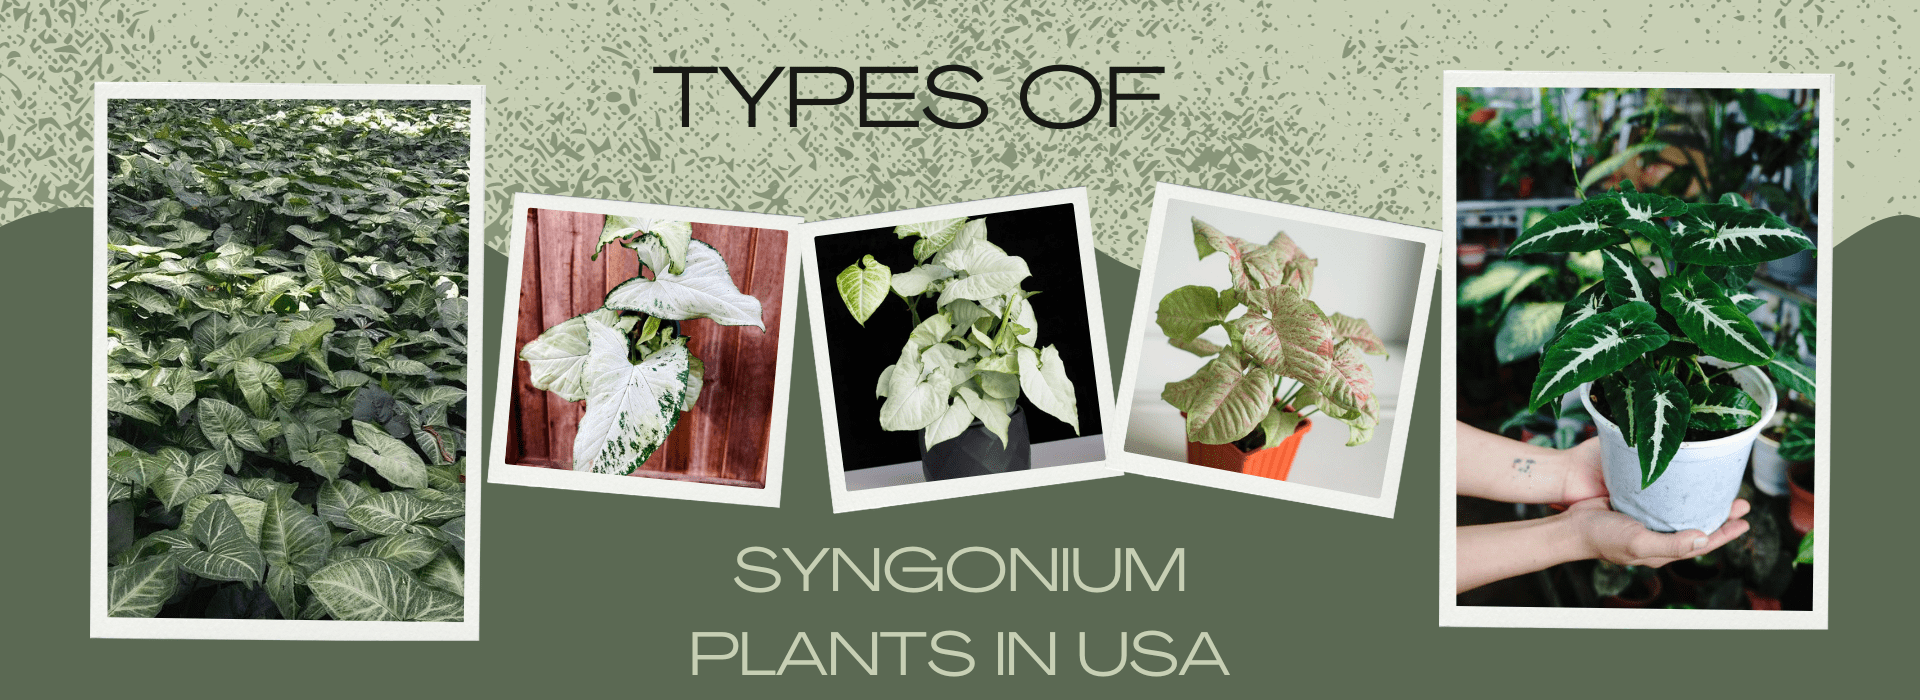 Types of Syngonium Plants